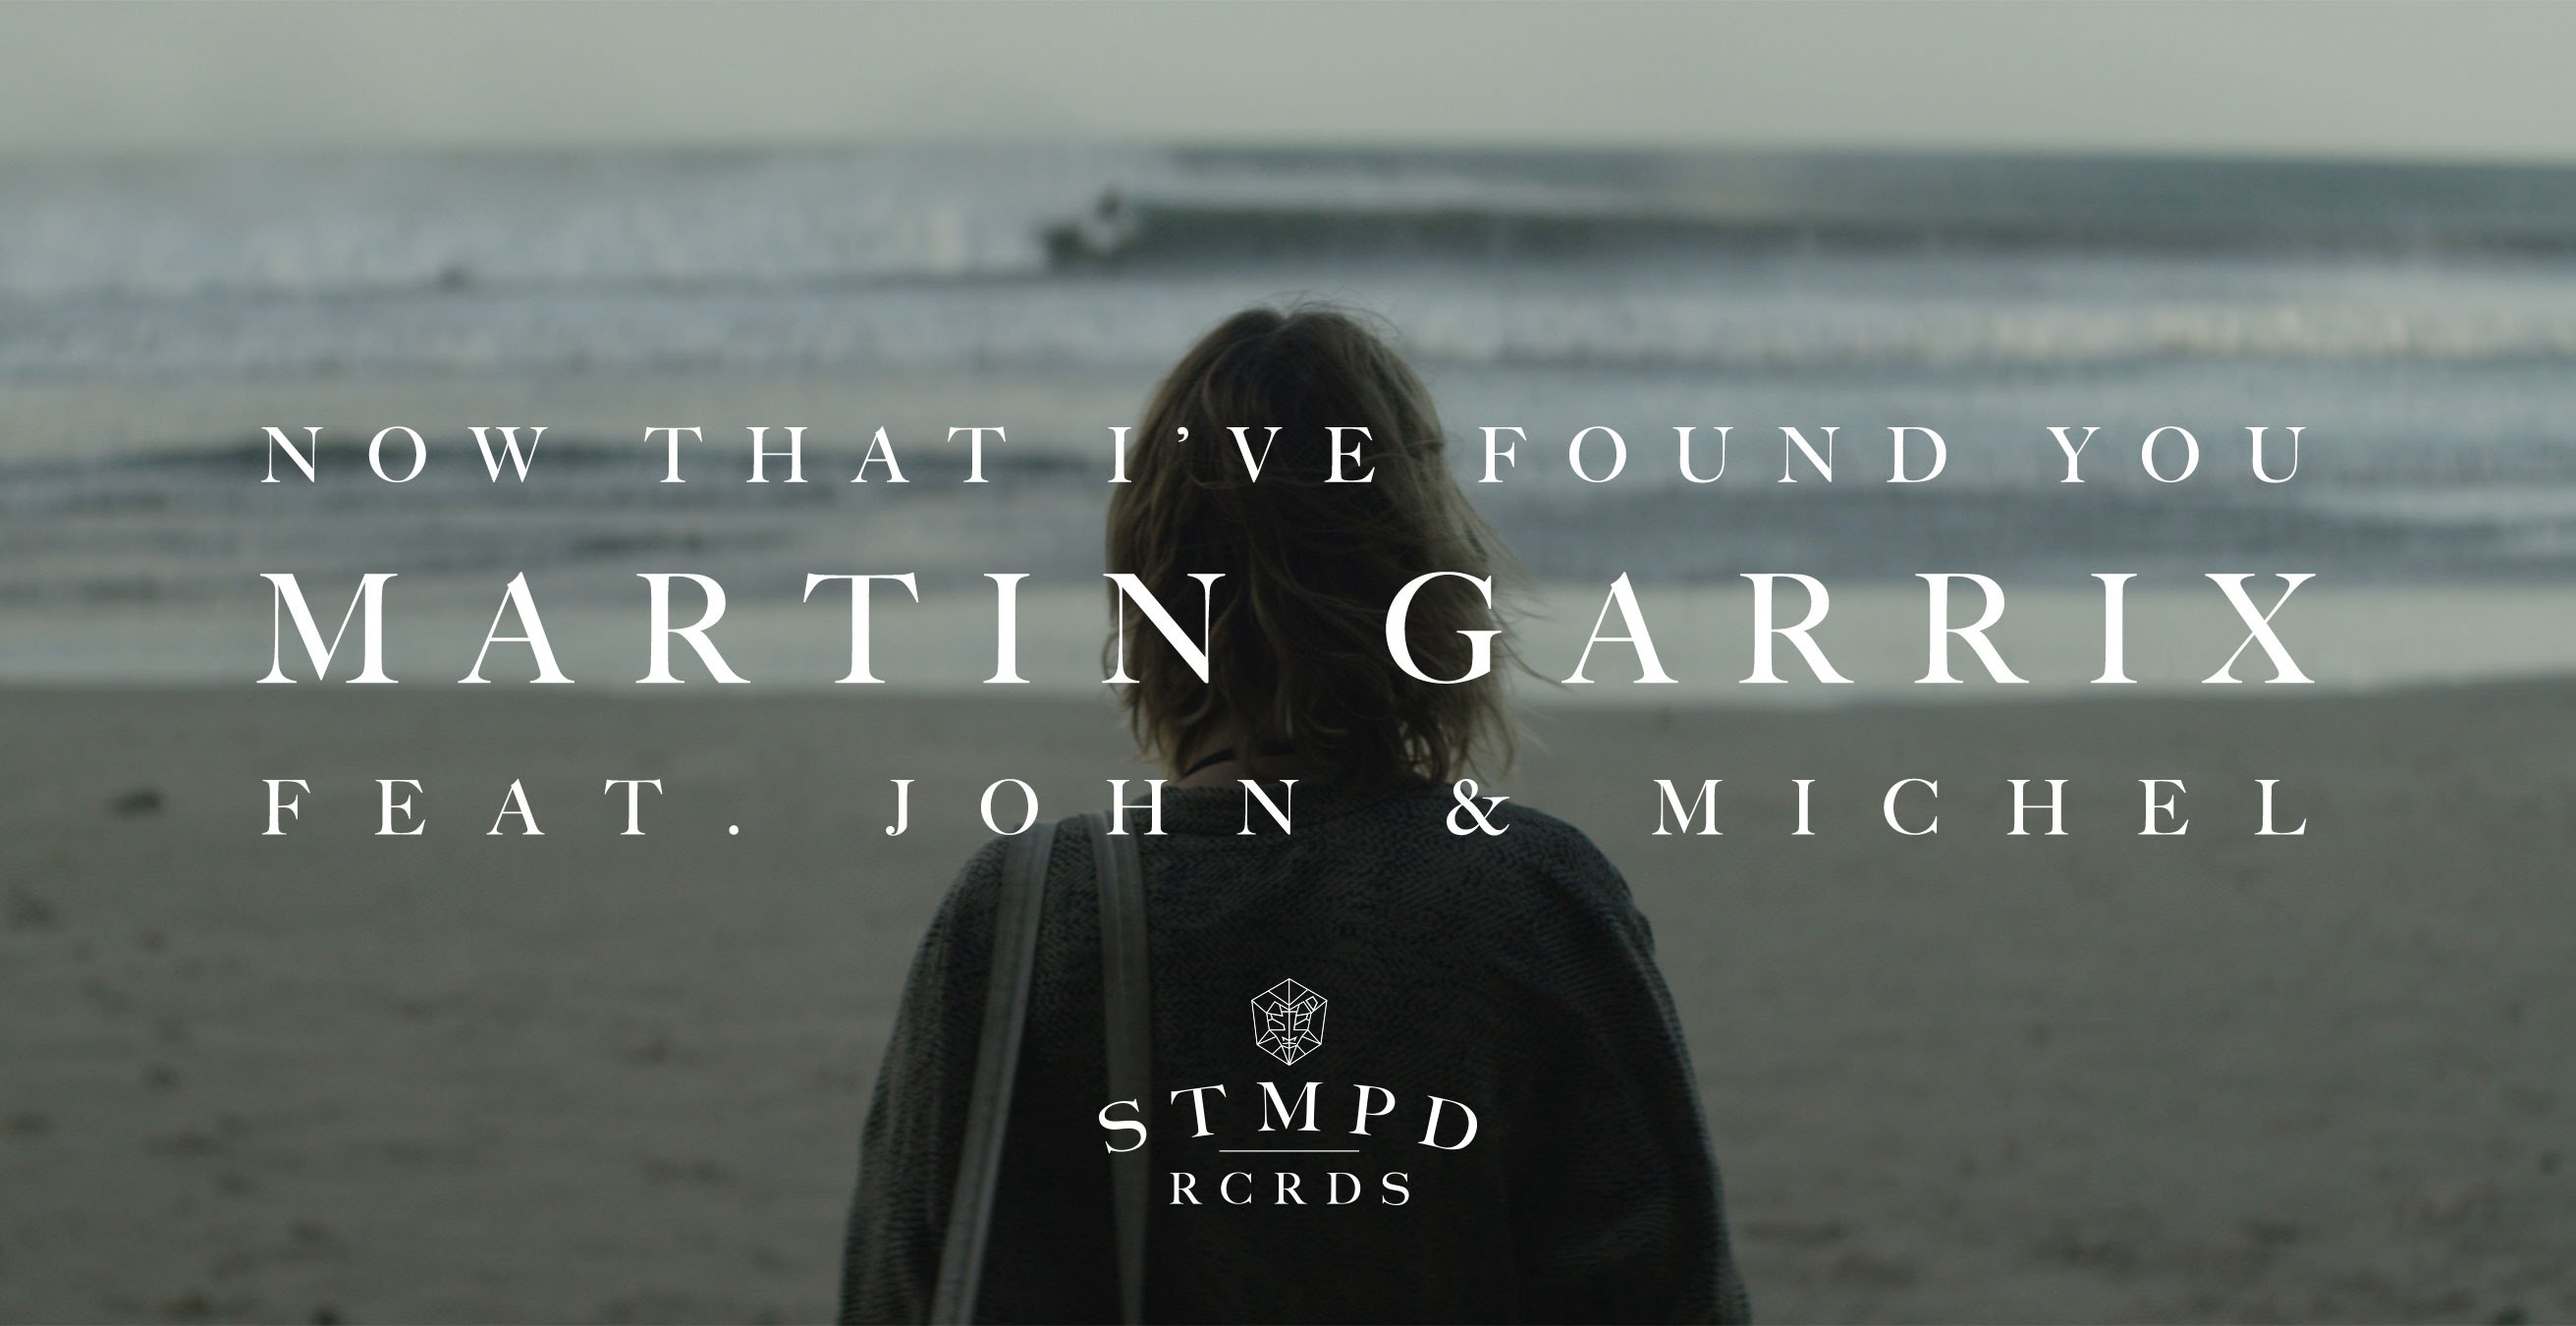 Martin Garrix - Now That I've Found You feat. John Martin & Michel Zitron